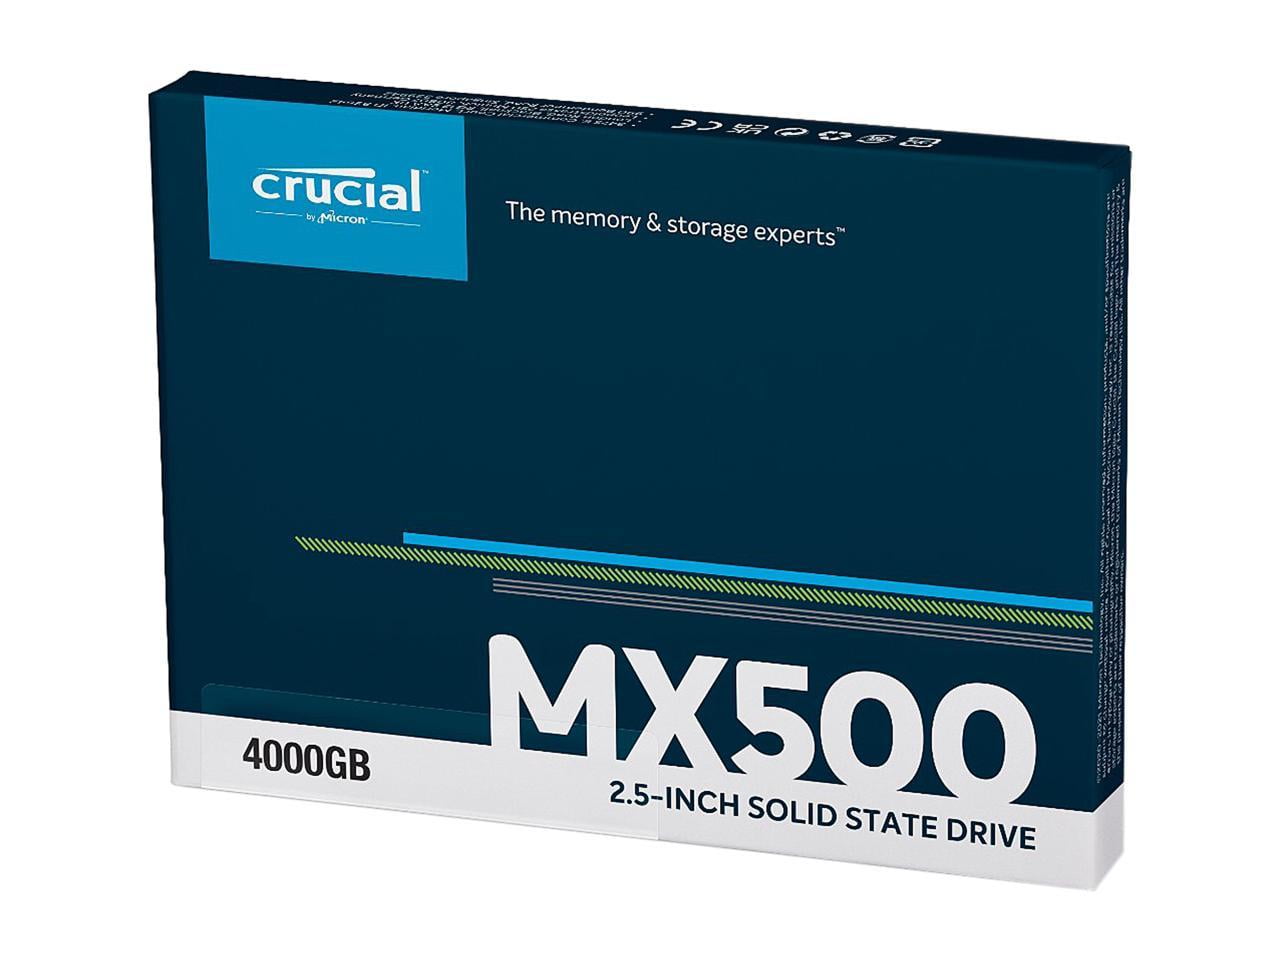 Crucial 4To CT4000MX500SSD1 SSD interne MX500-jusqua 560 Mo/s (3D NAND, SATA,  2,5 pouces) - Cdiscount Informatique